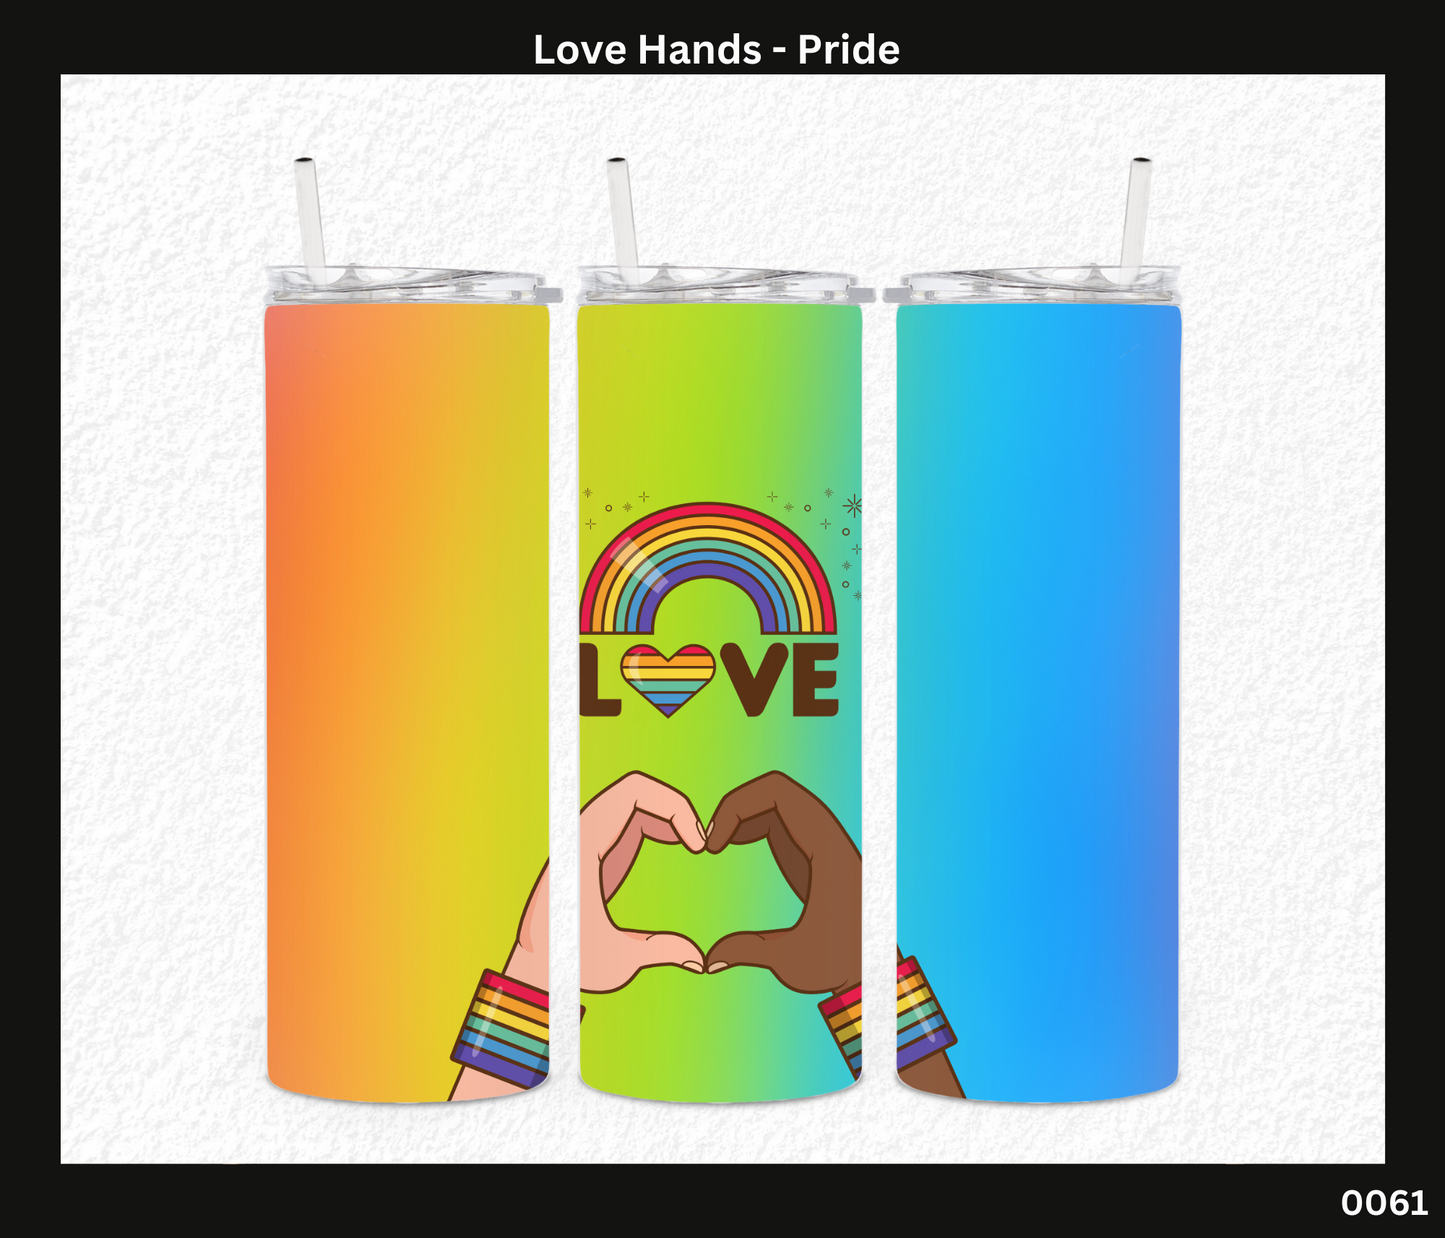 Love Hands - Pride